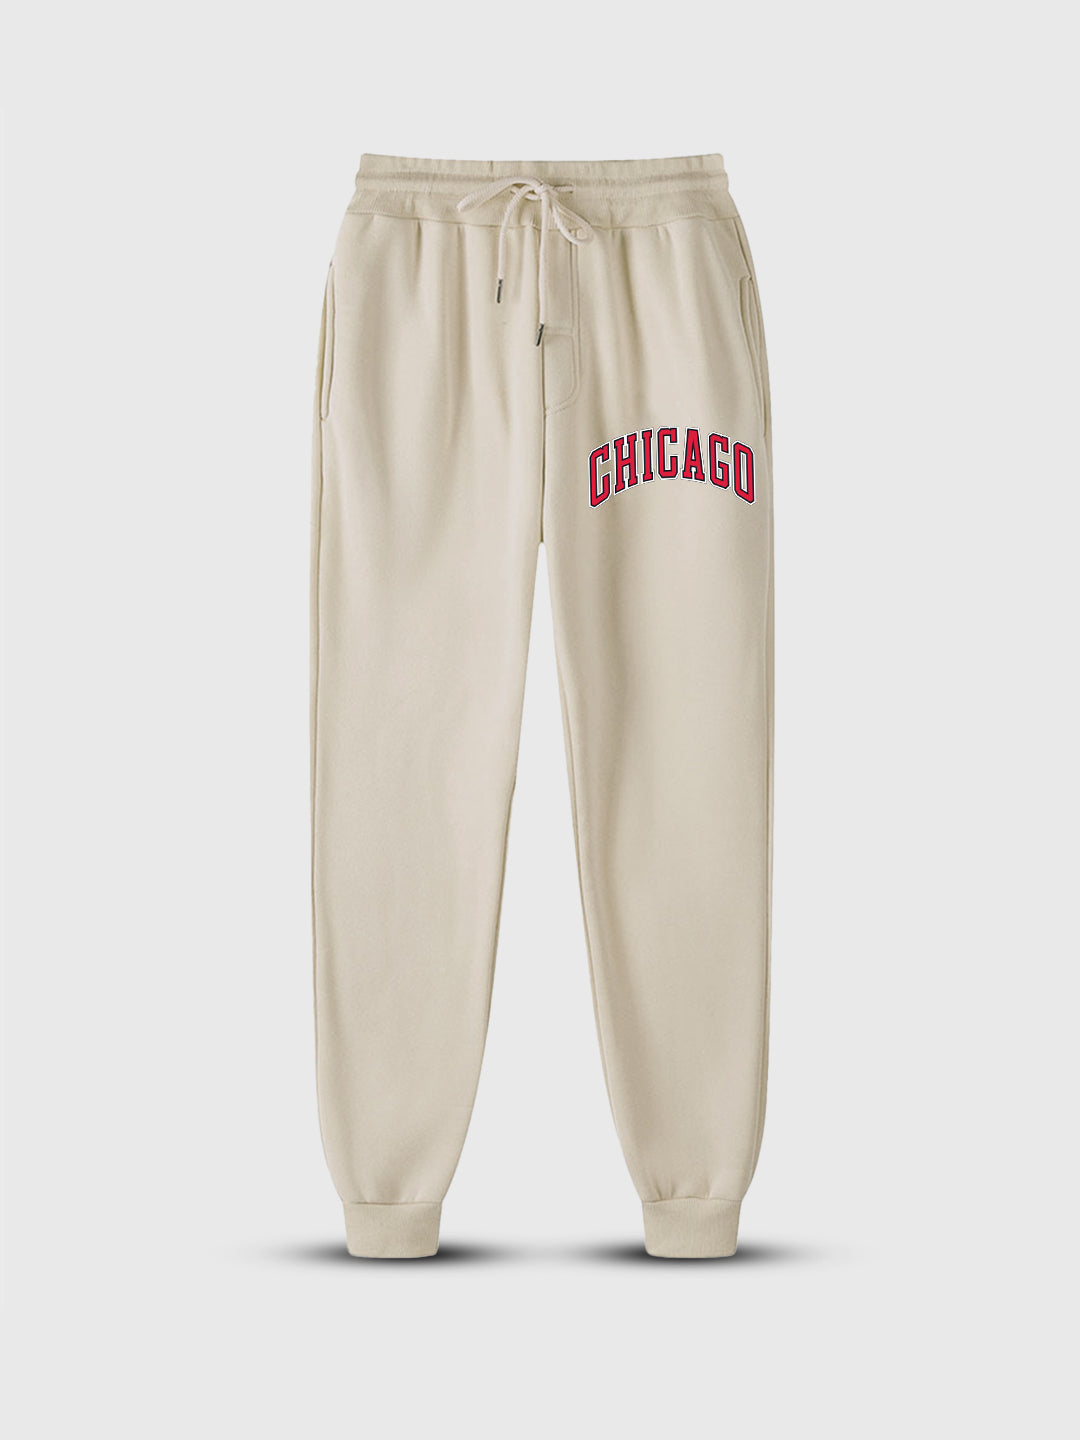 Chicago USA Printed Heavy Fleece Trouser / Jogger Pant